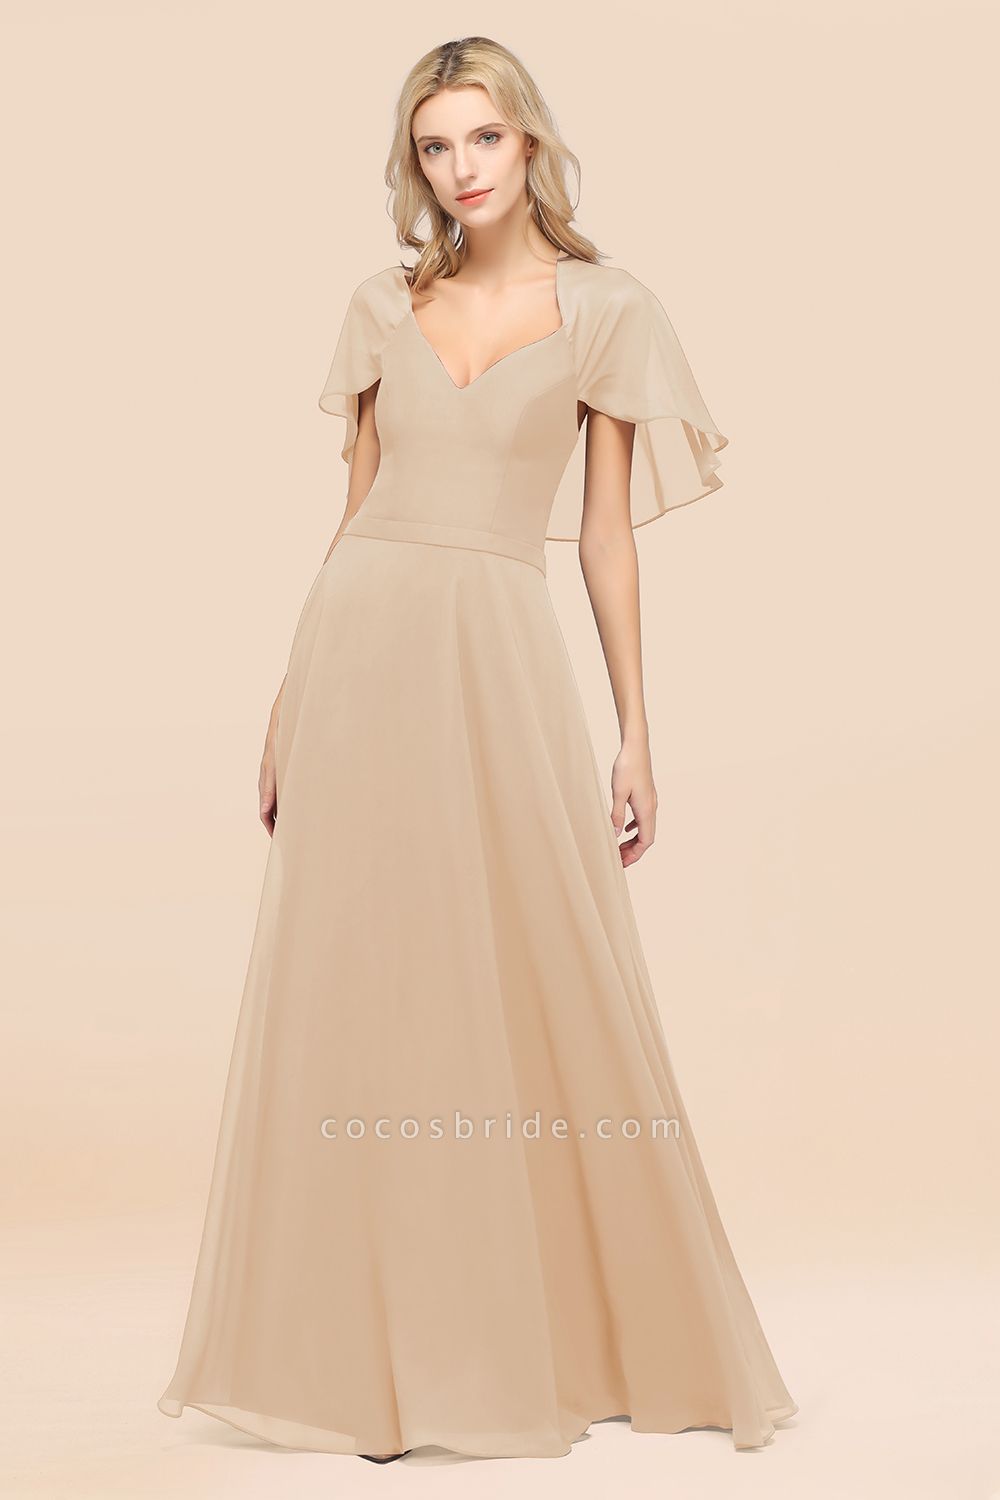 A-Line Chiffon Satin V-Neck short-sleeves Floor-Length Bridesmaid Dress